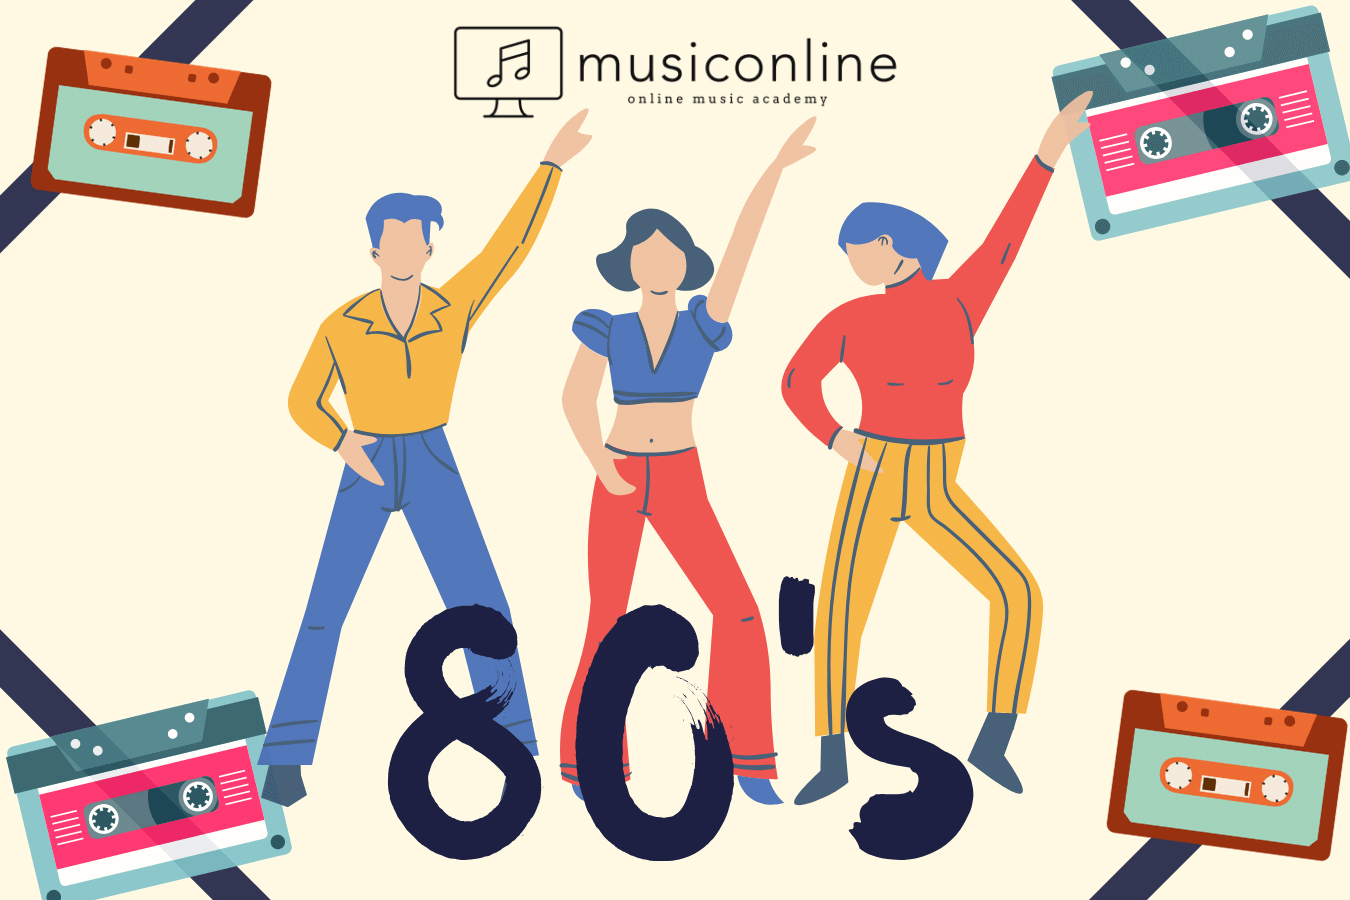 80s genre music